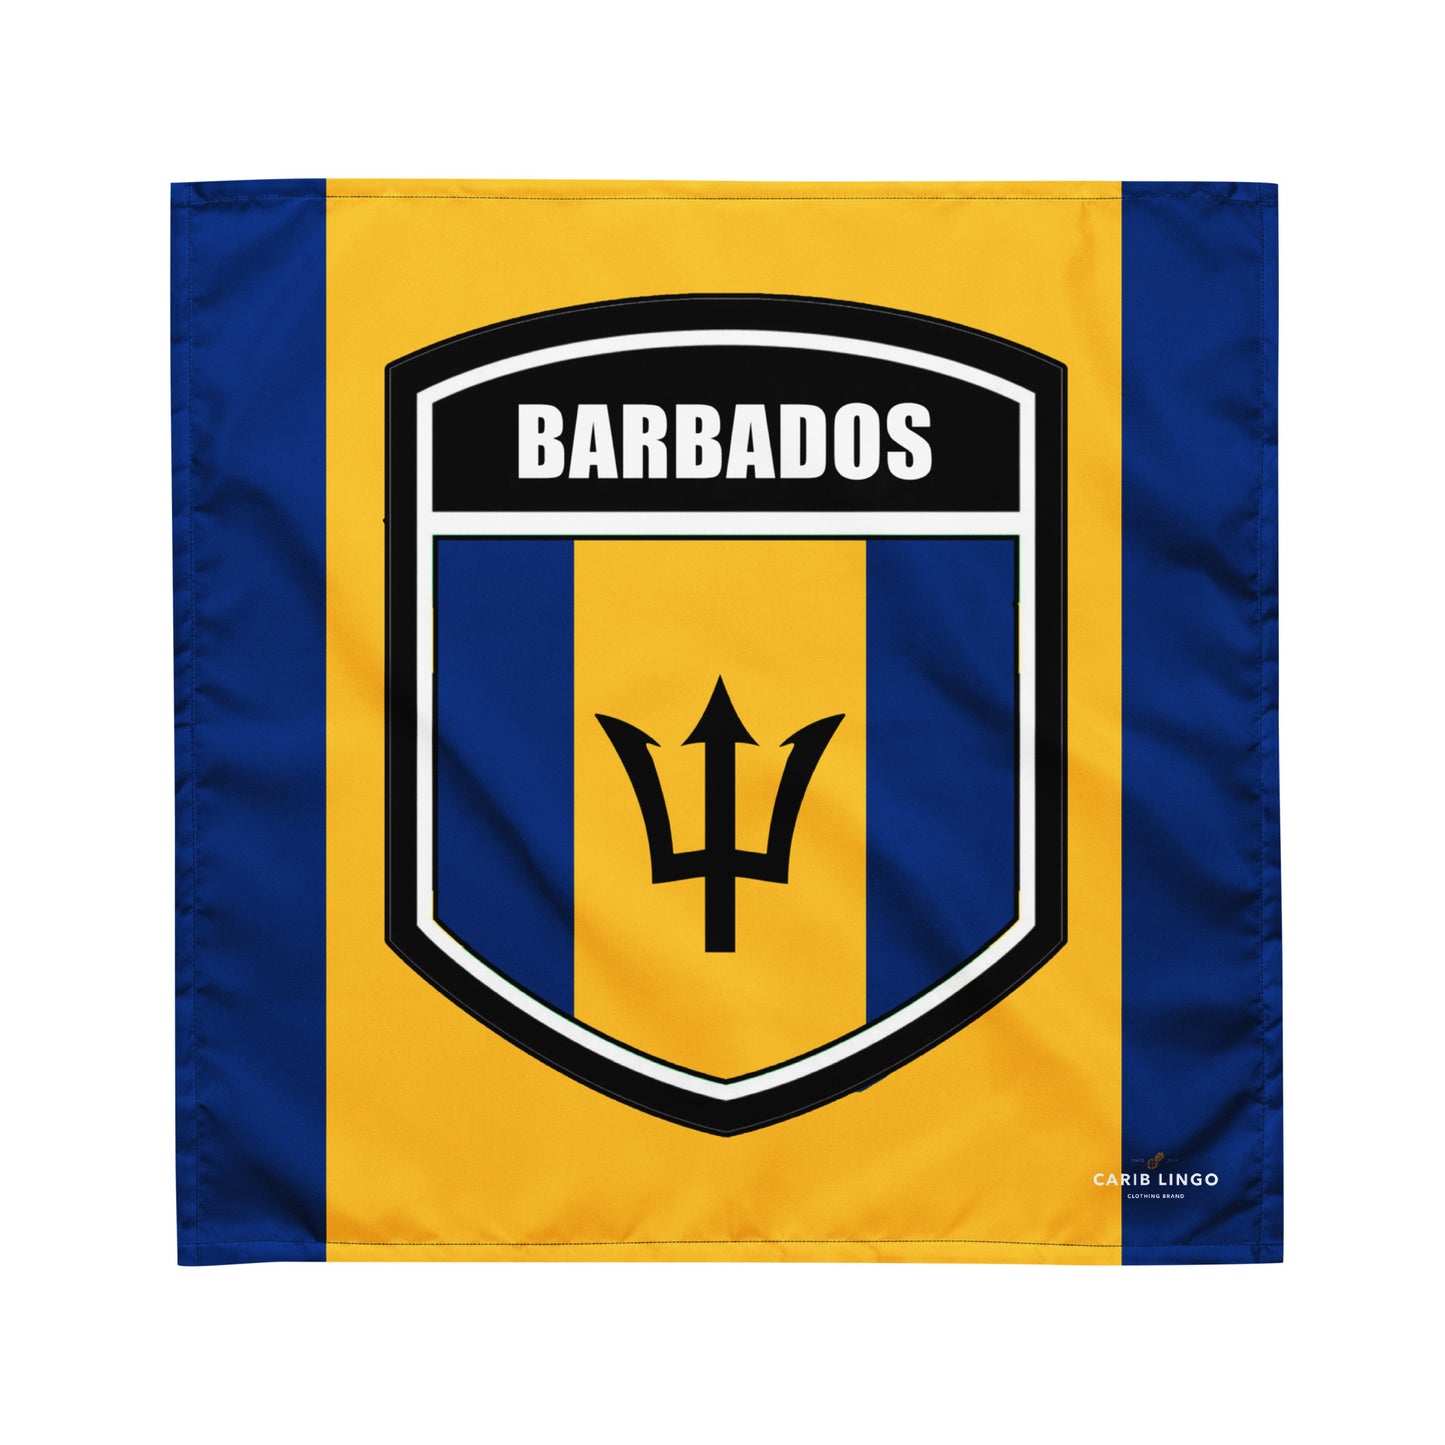 Barbados bandana